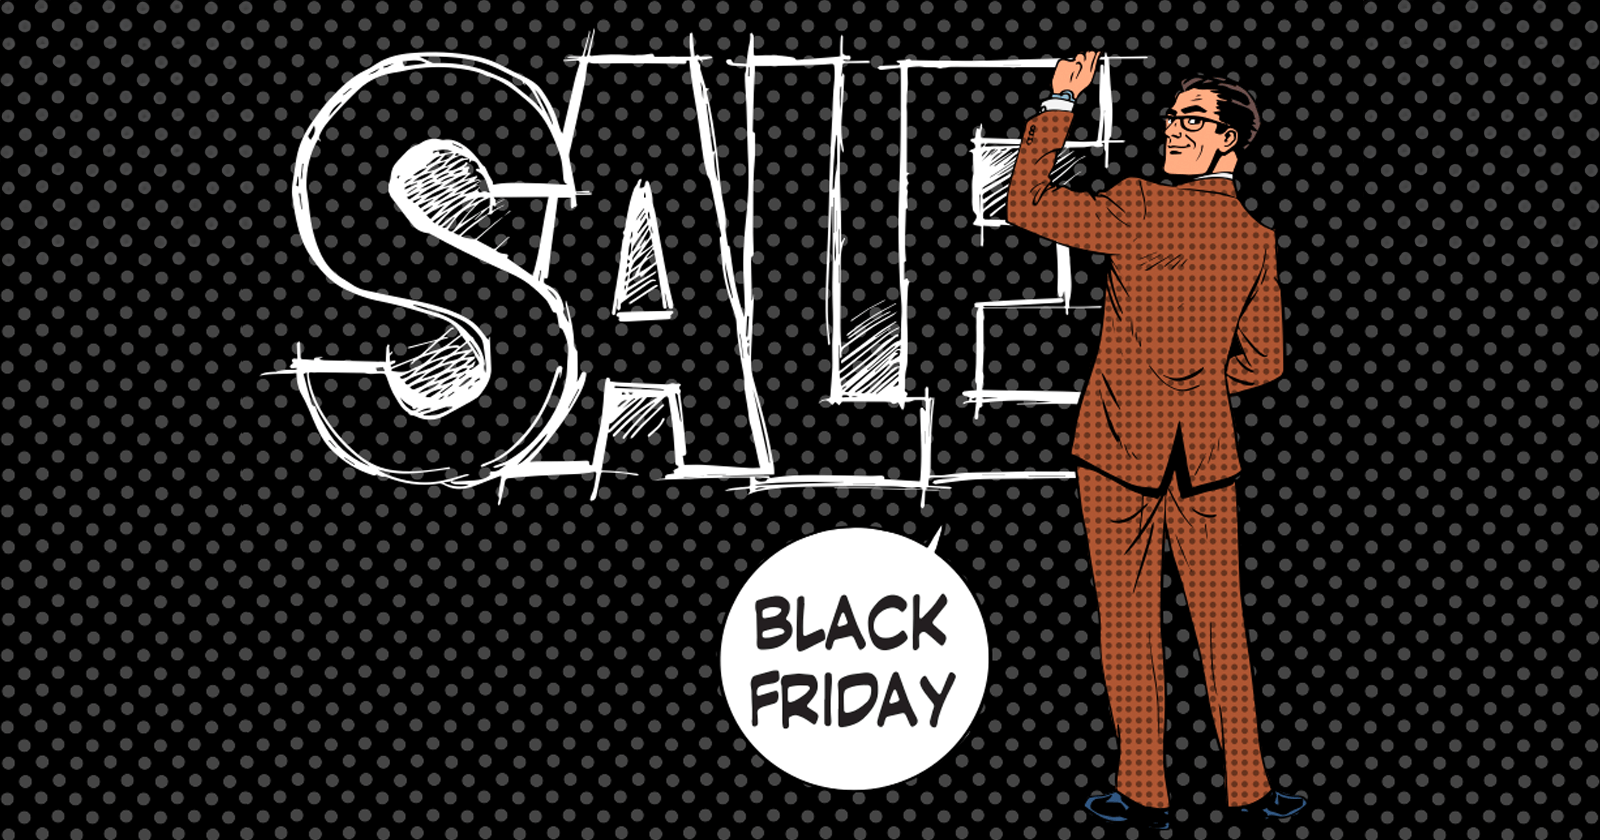 Retro black friday sale image - man in suit